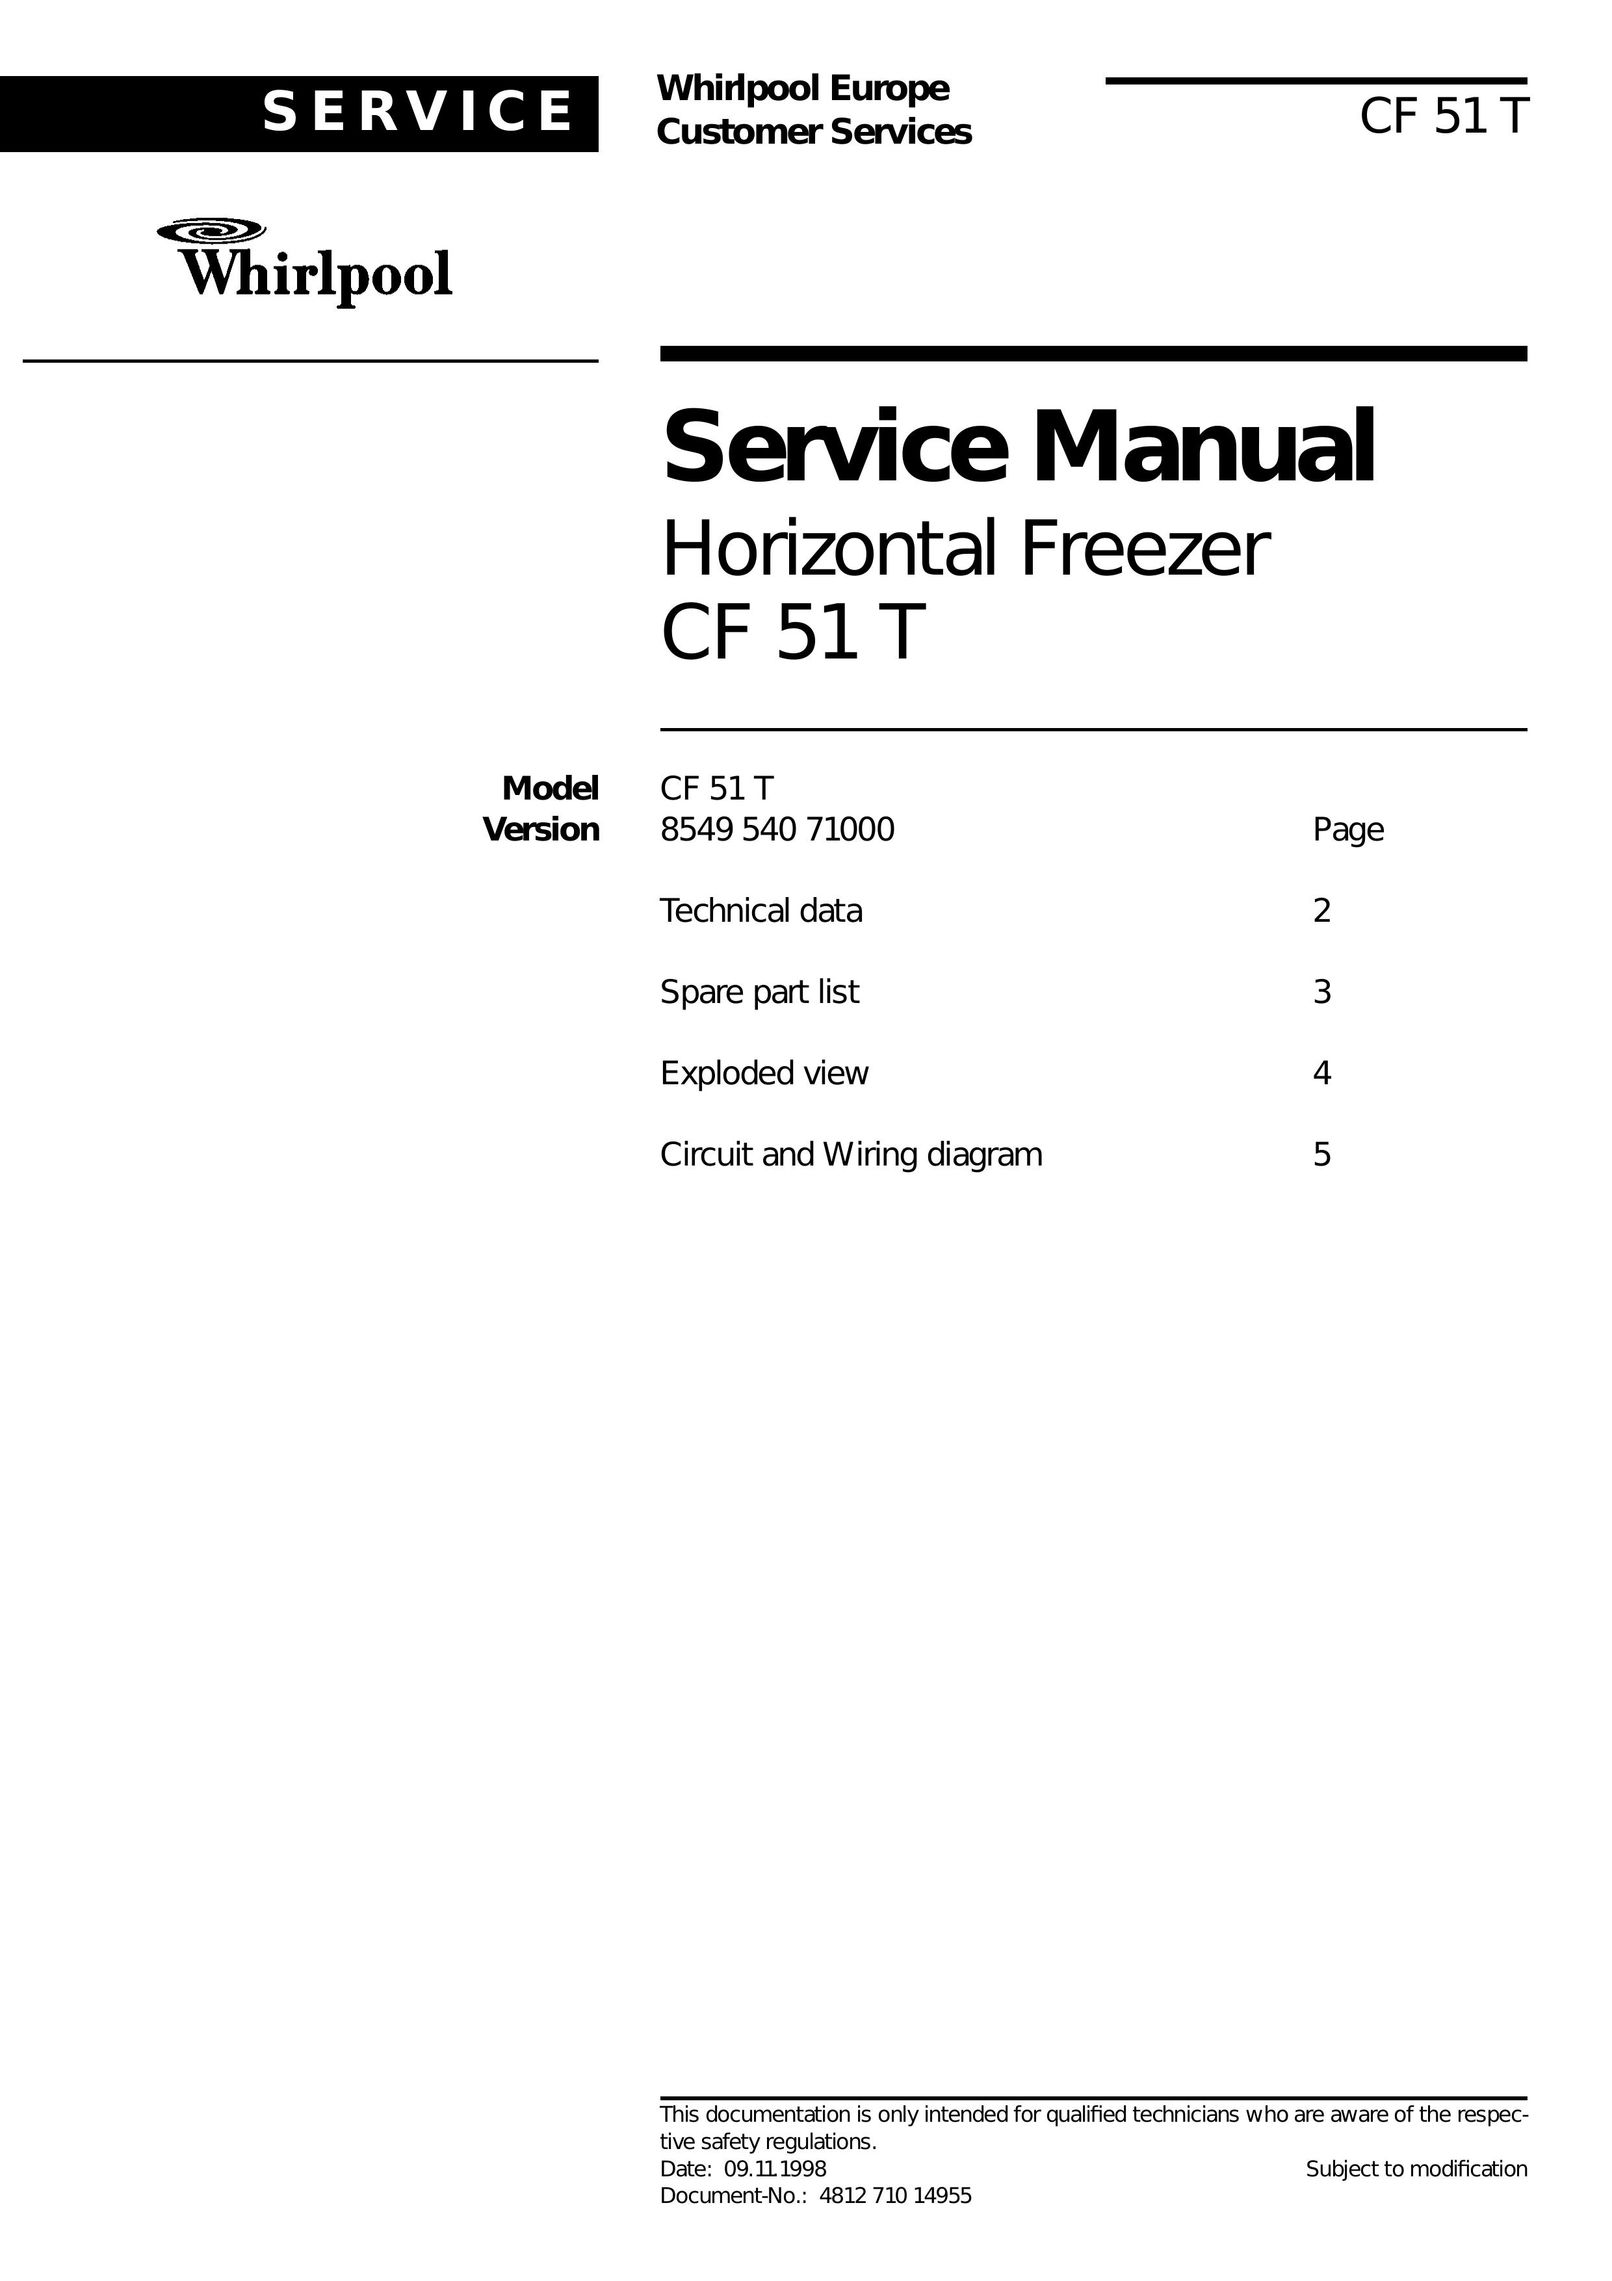 Whirlpool CF 51 T Freezer User Manual